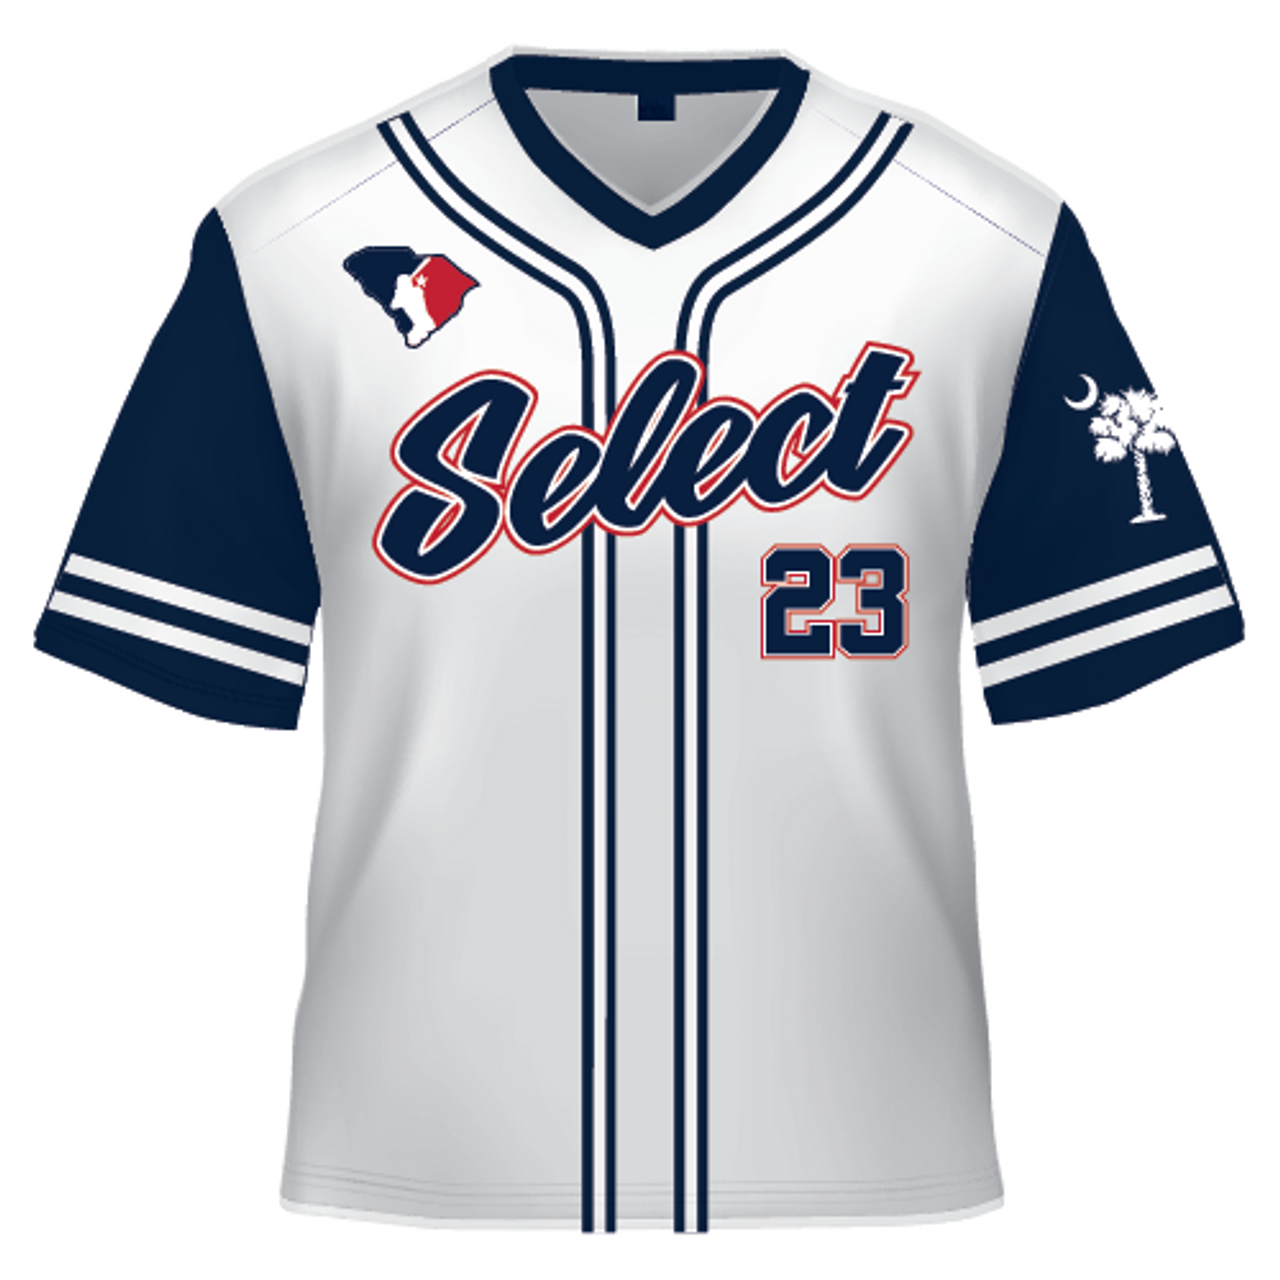 SC Select Baseball Jersey - White Jersey - JayMac Sports Products